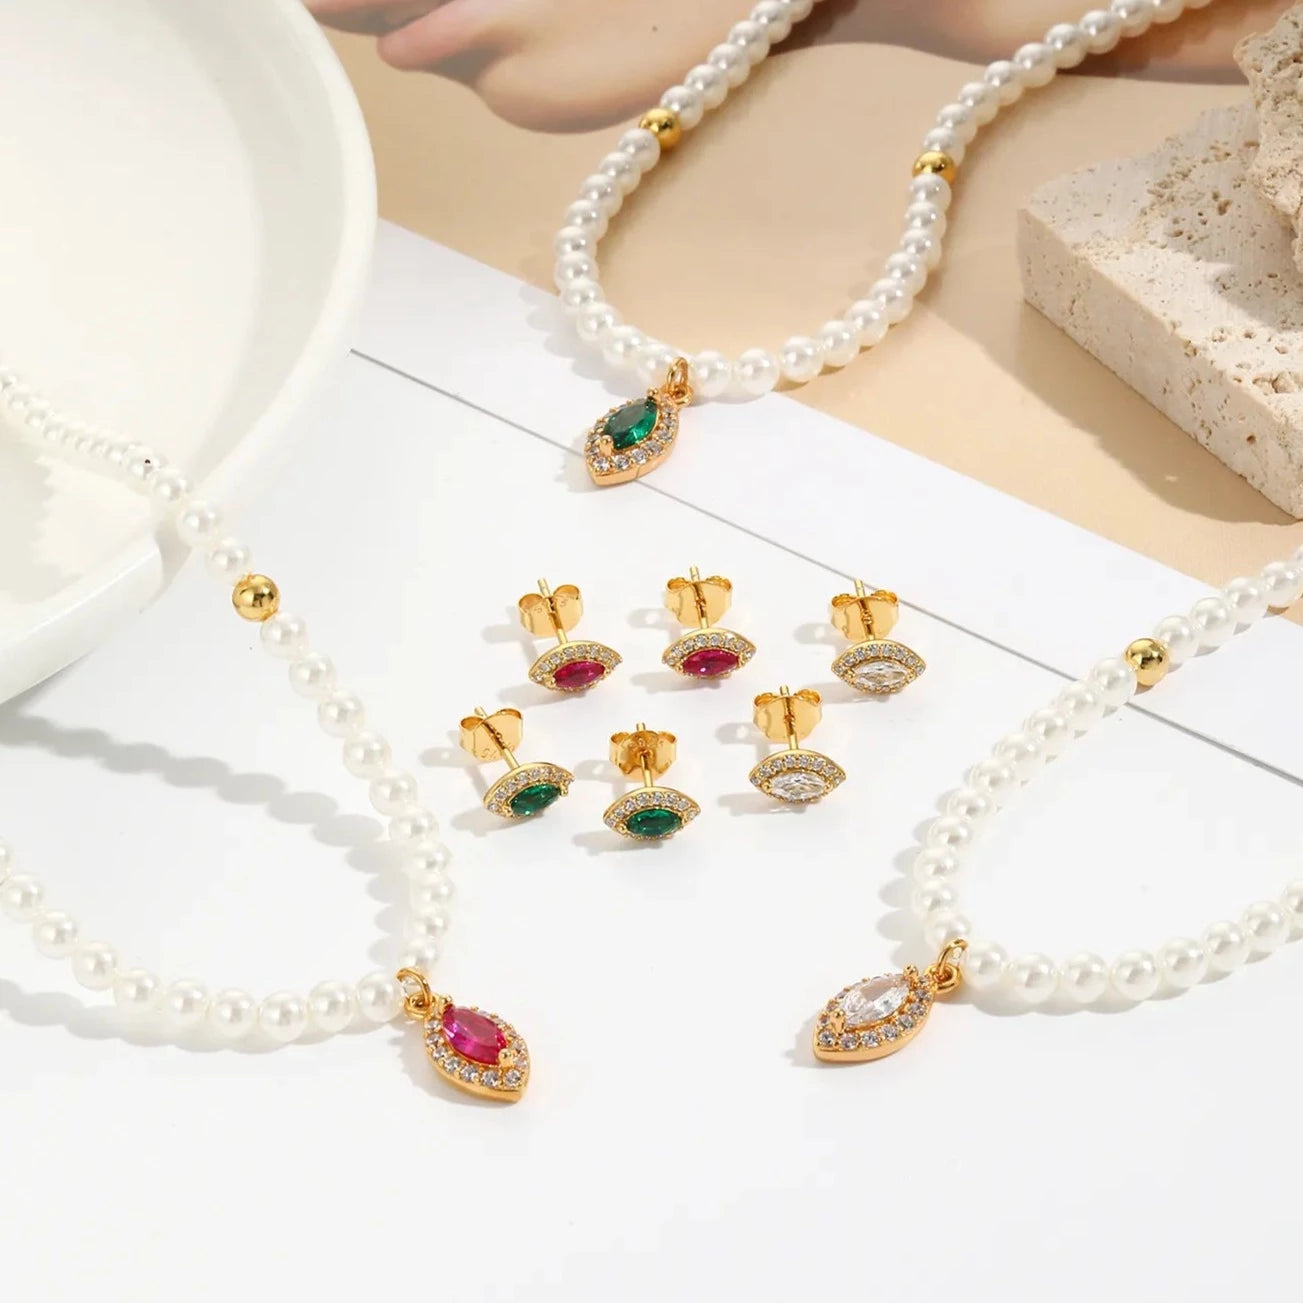 Luxe Oval Crystal Gemstone Stud Earrings